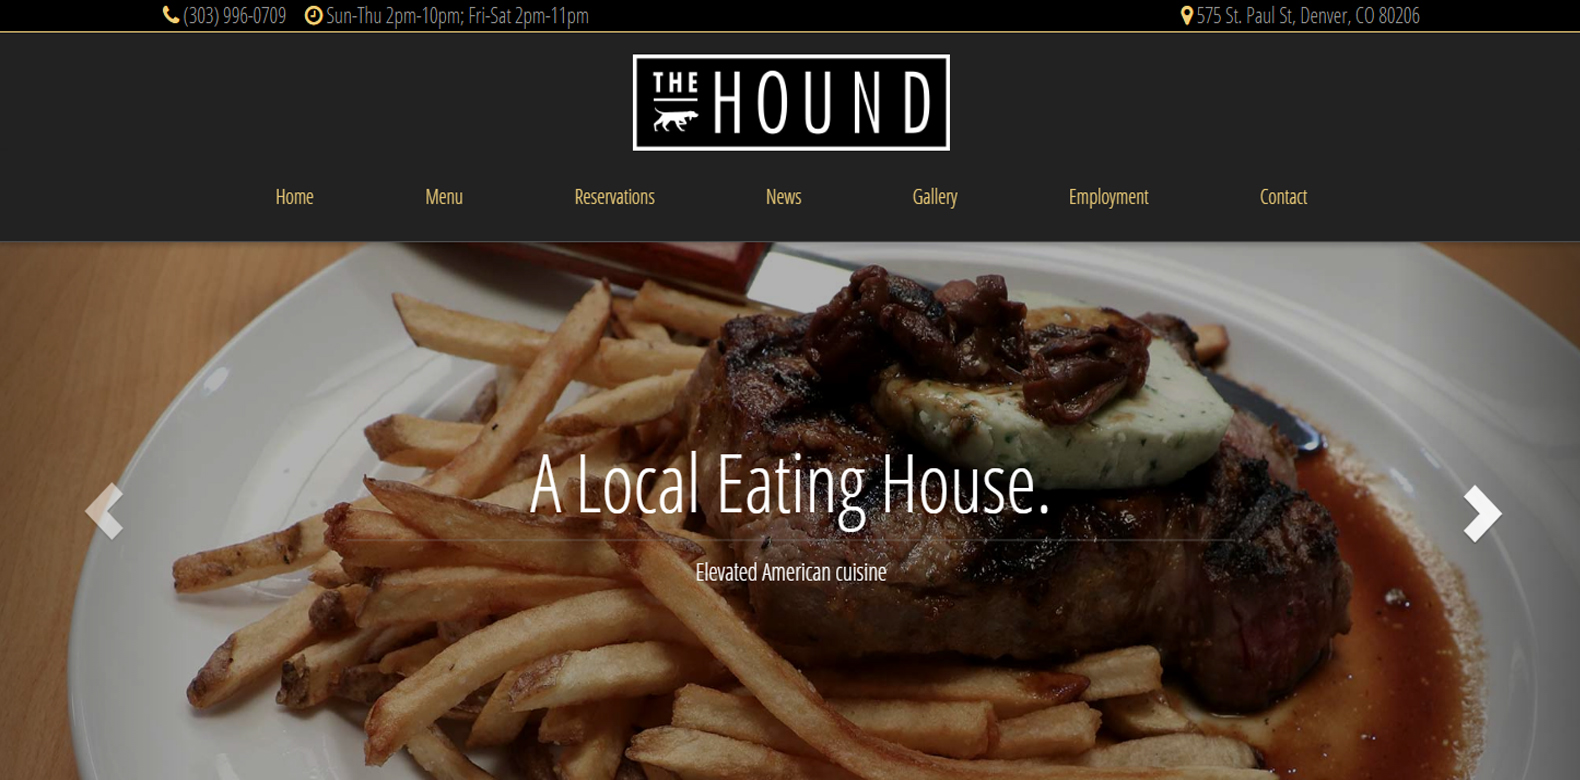 
New Website Upgrade: The Hound